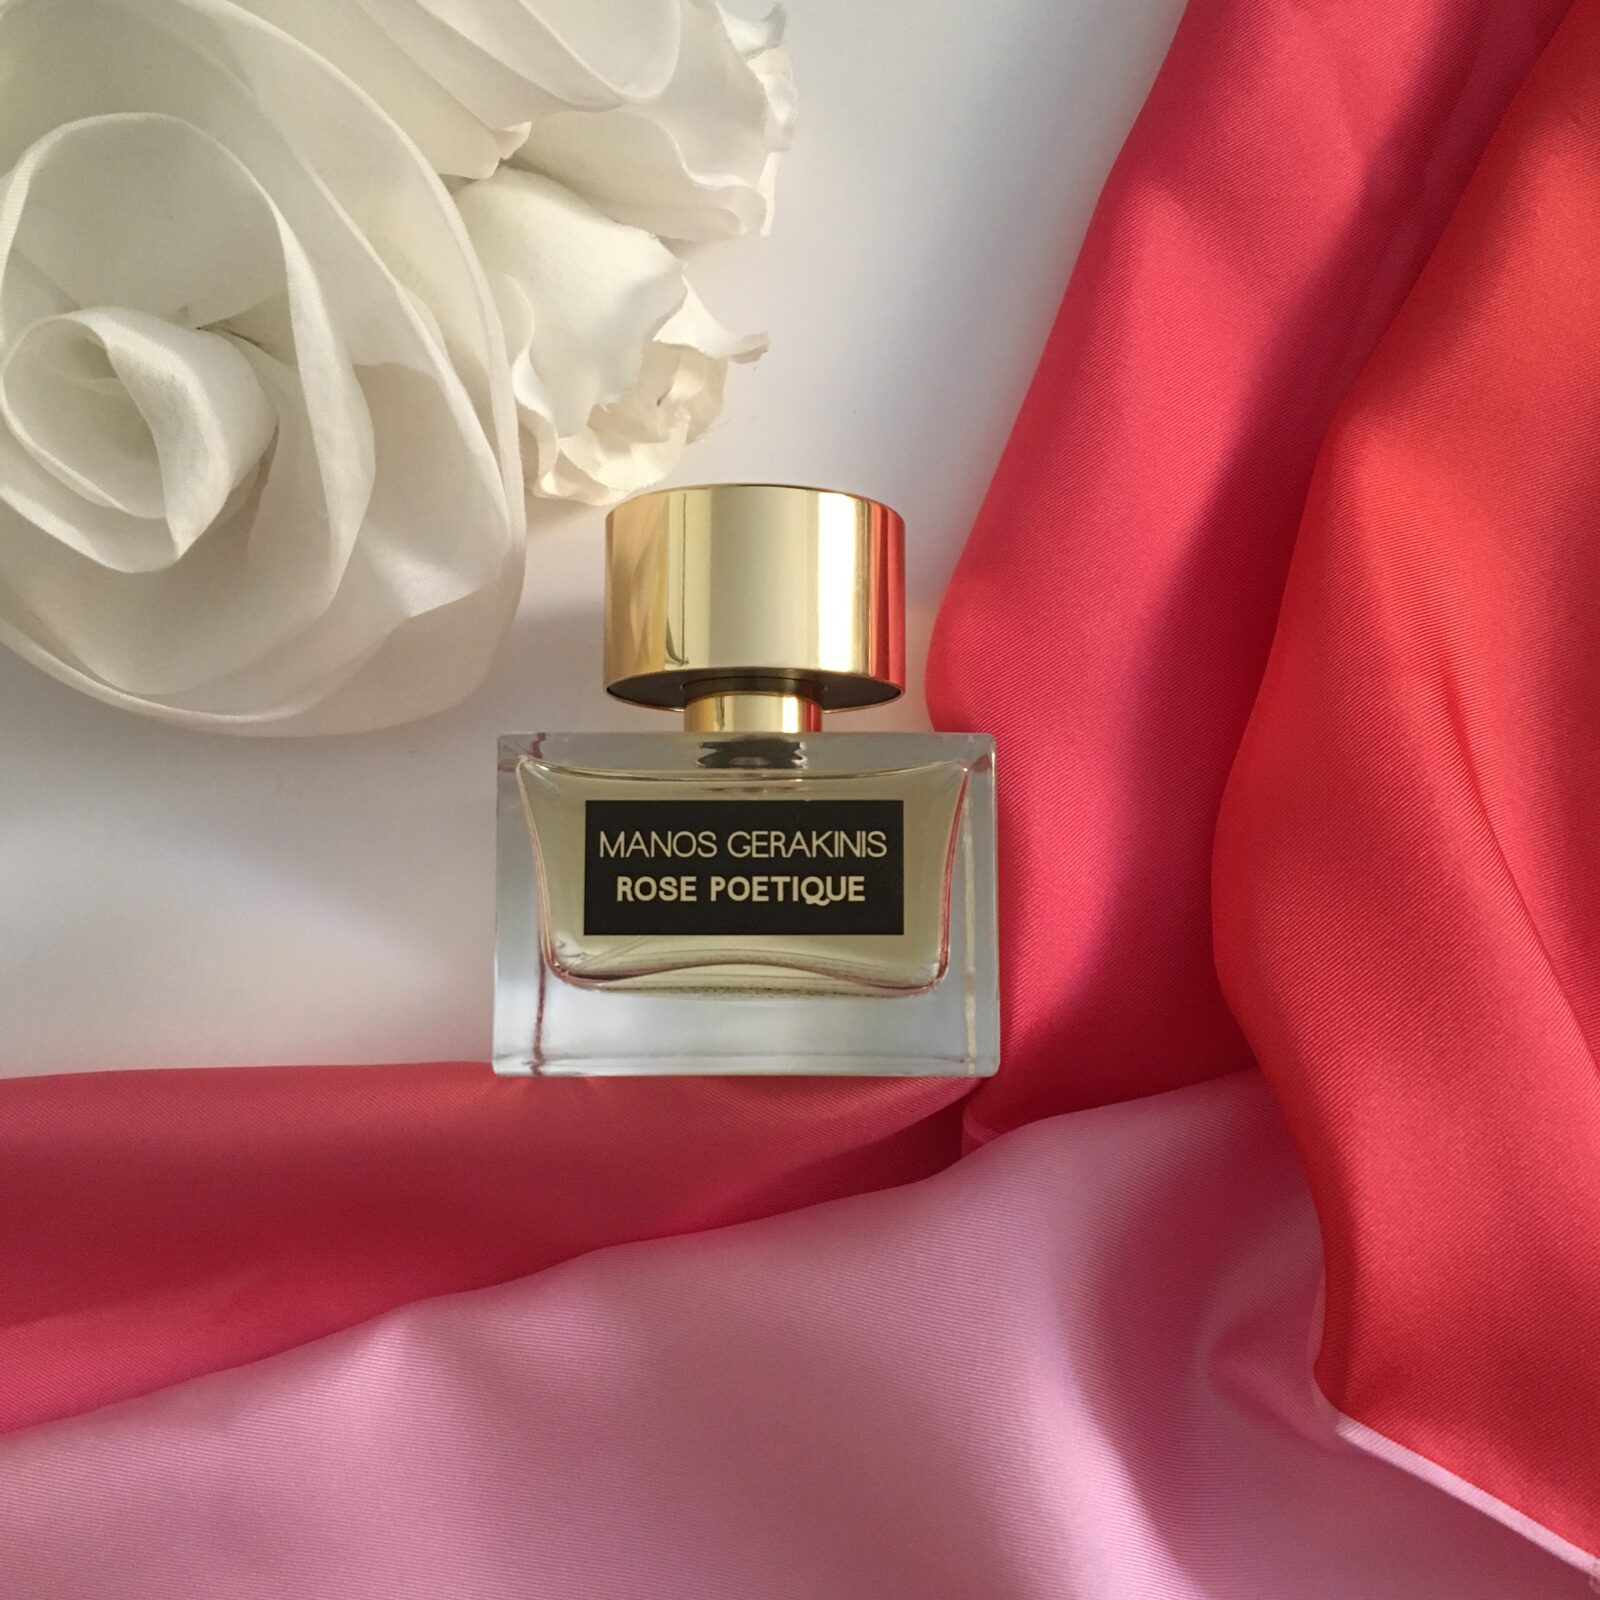 Rose Poetique by Manos Gerakinis Parfums de Jour collection